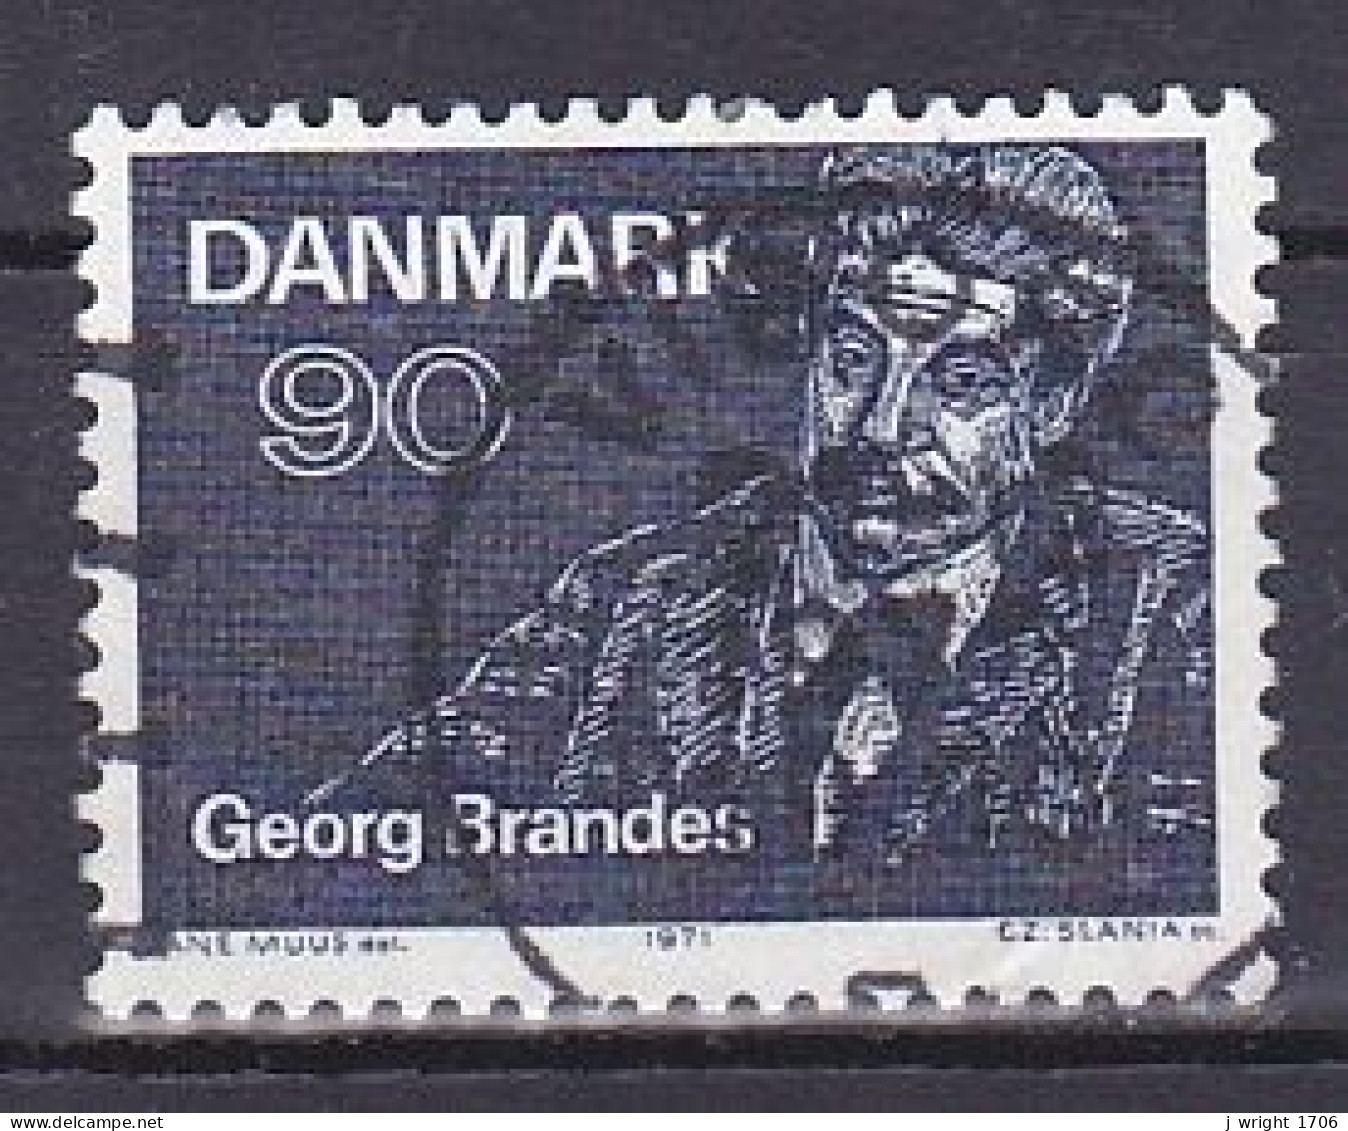 Denmark, 1971, Georg Brandes First Lectures Centenary, 90ø, USED - Gebruikt